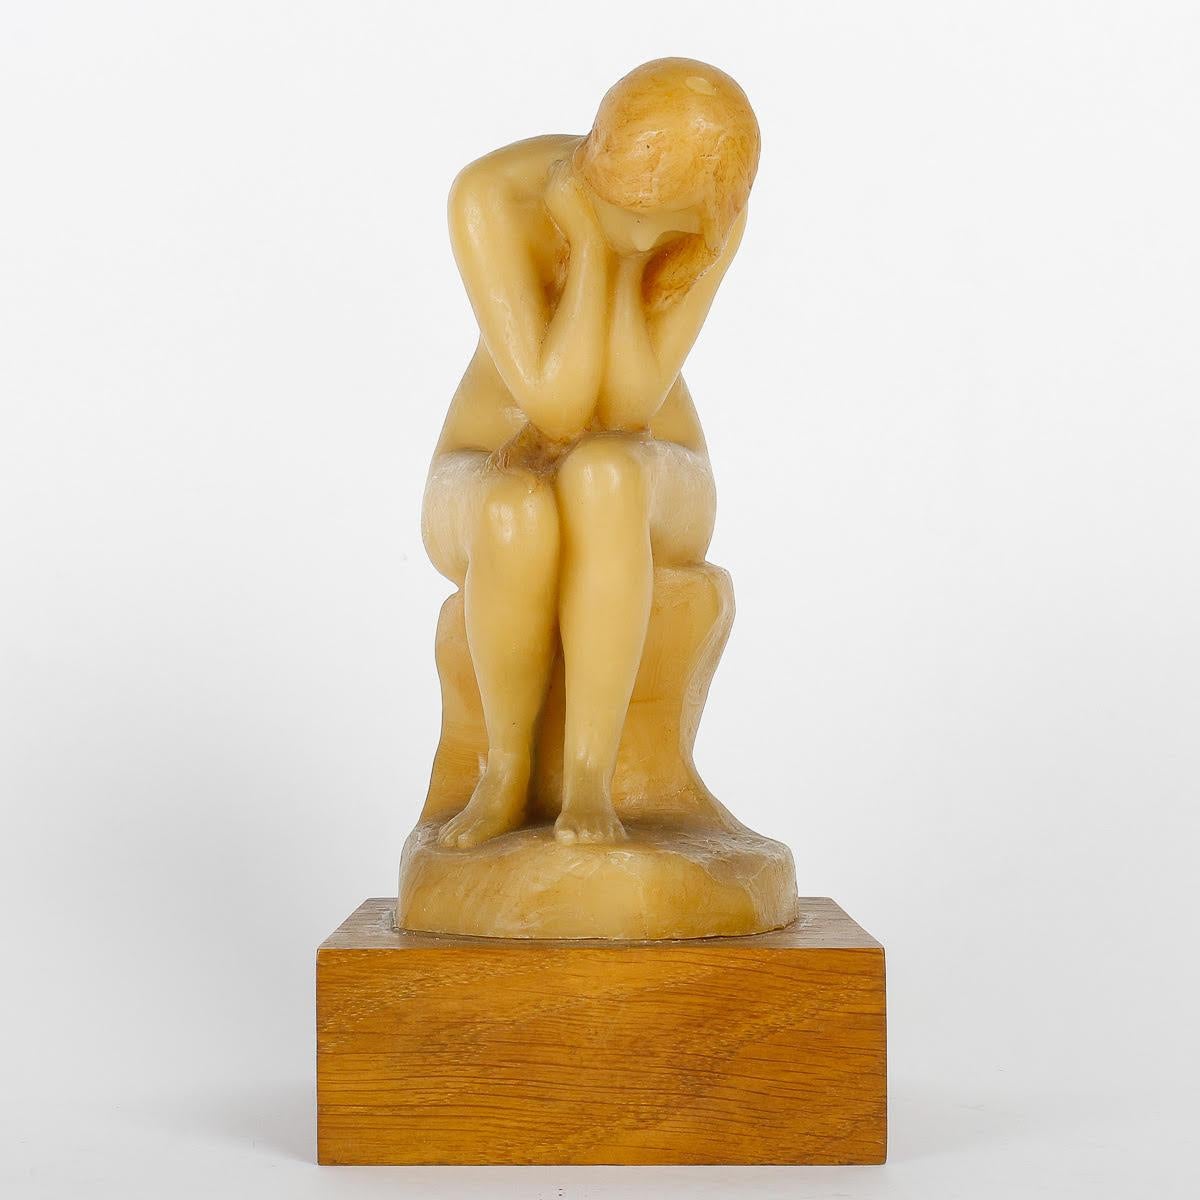 Wax sculpture by Hervé Vernhes, 20th century.

Wax sculpture of a pensive woman by Hervé Vernhes, signed on the terrace, 20th century.

H: 17cm, W: 10cm, D: 10cm